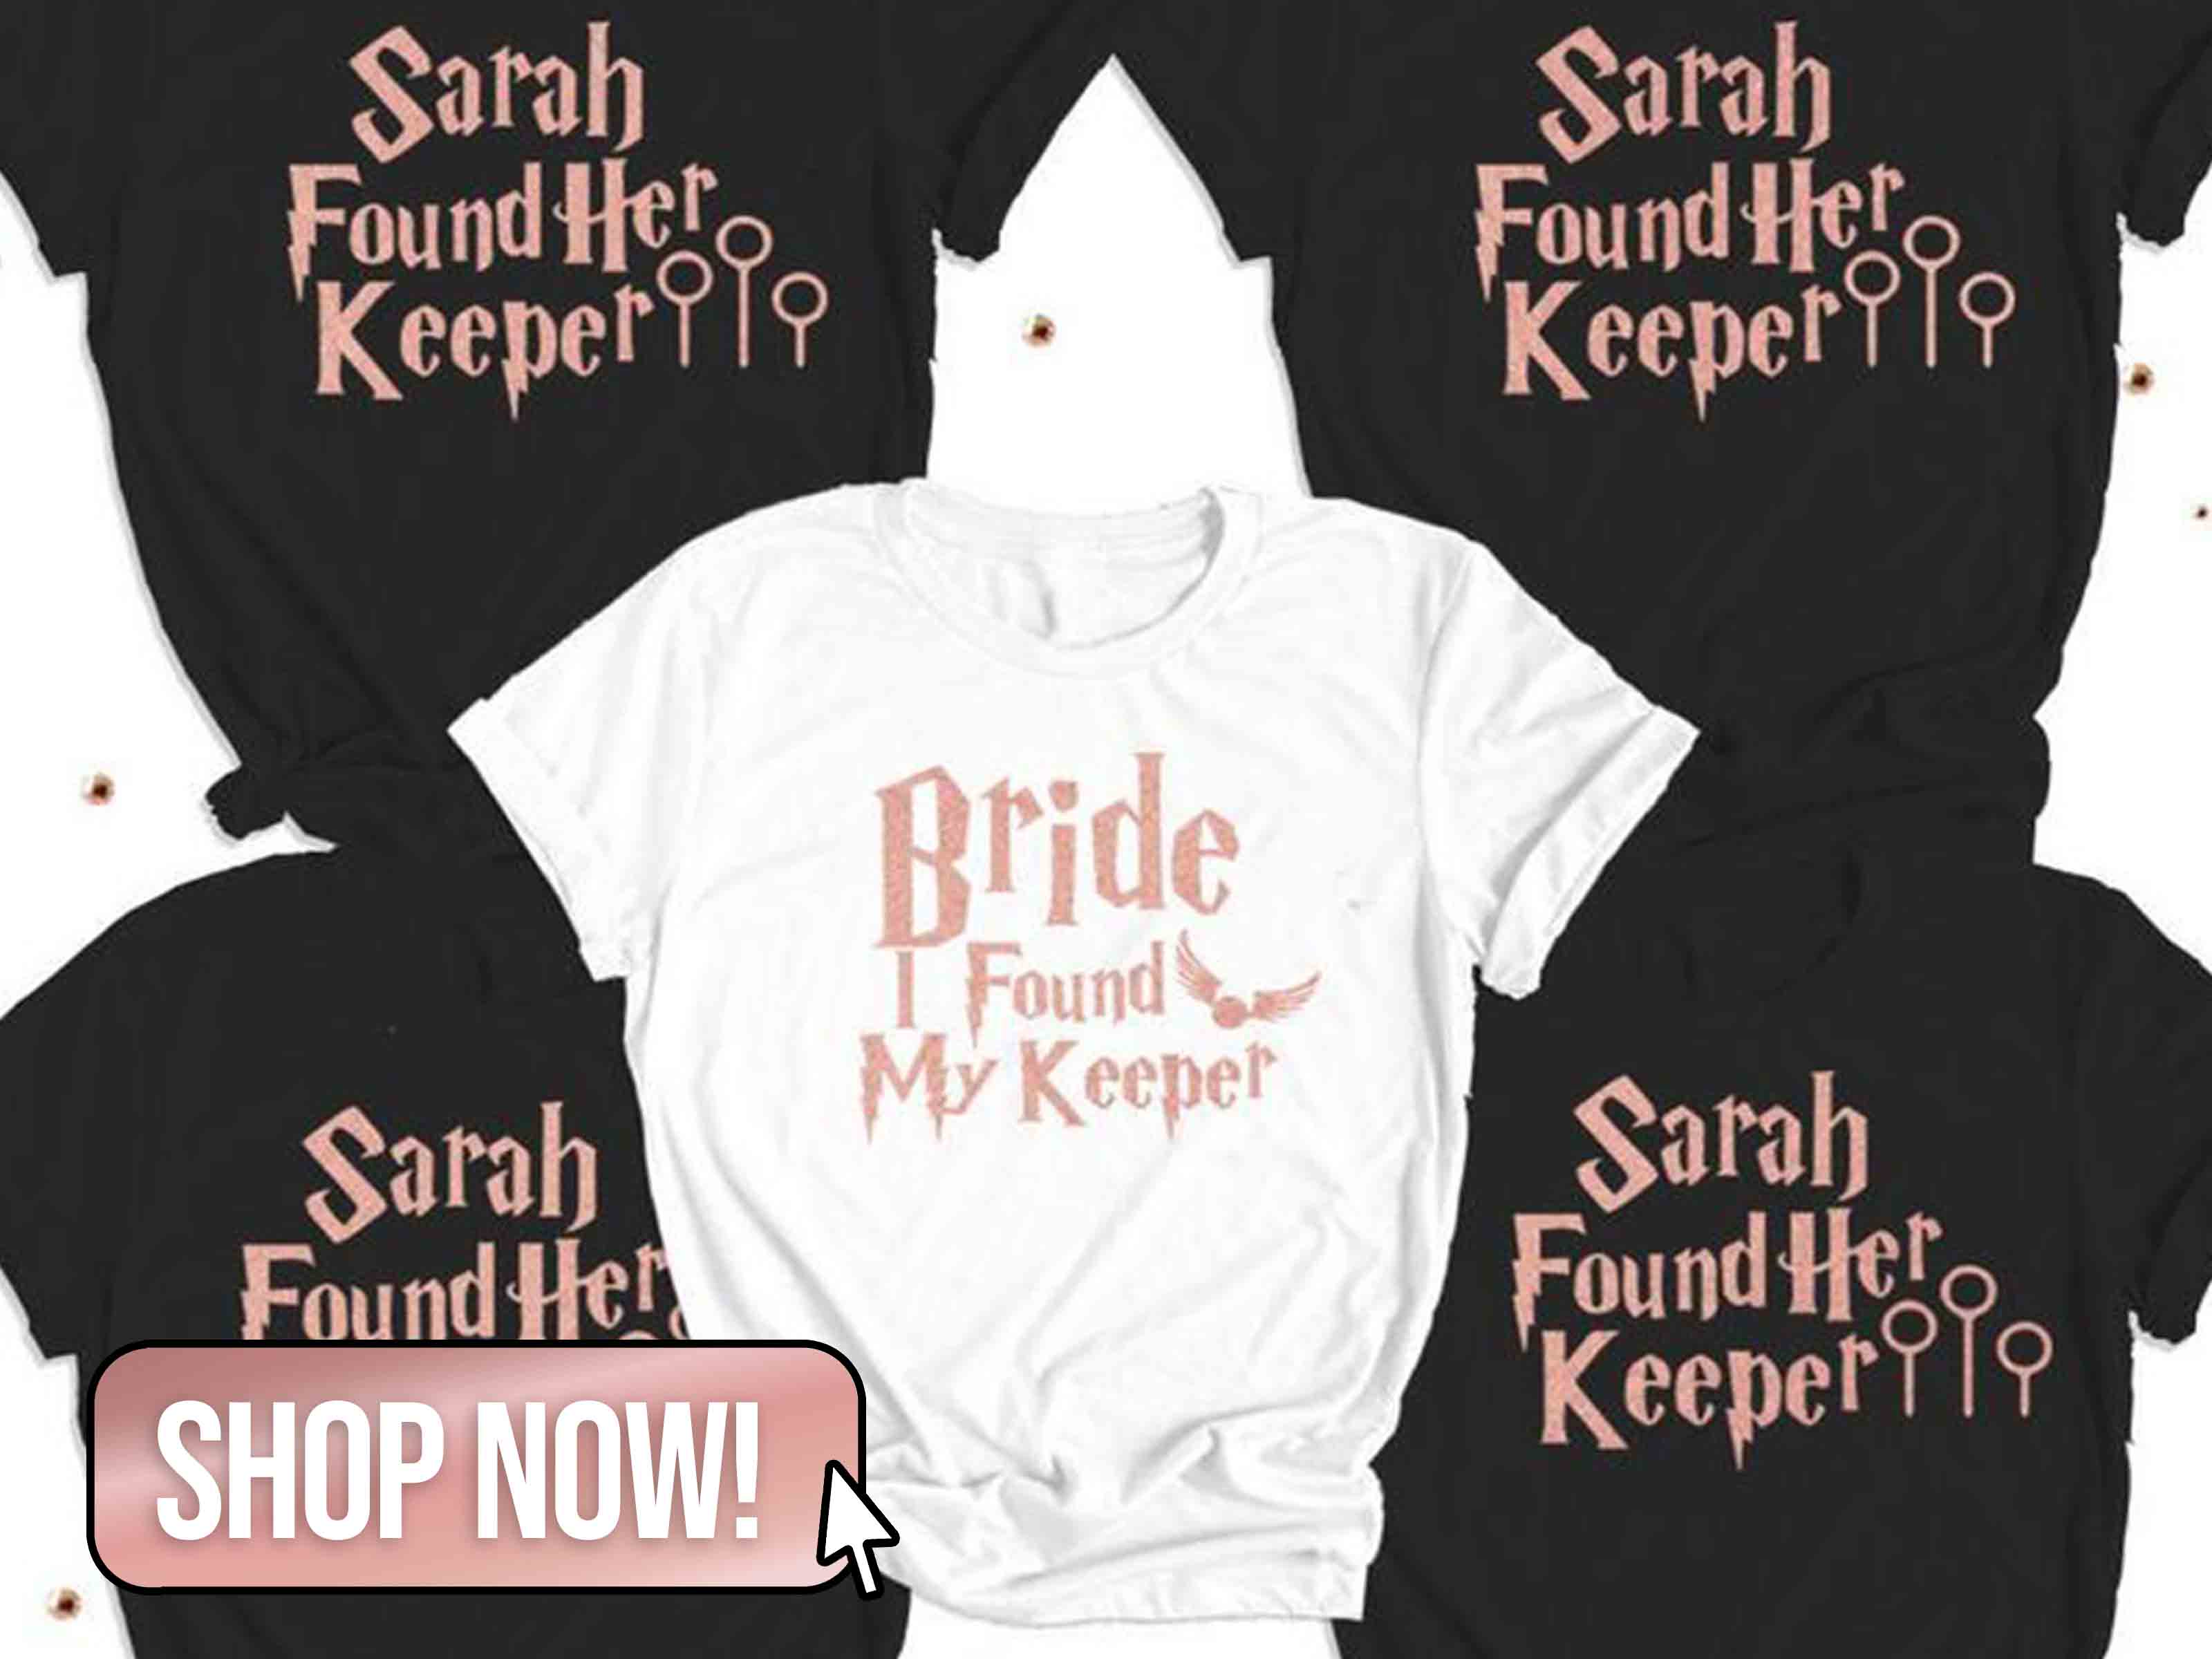 She Found Her Keeper Bridal Shirts